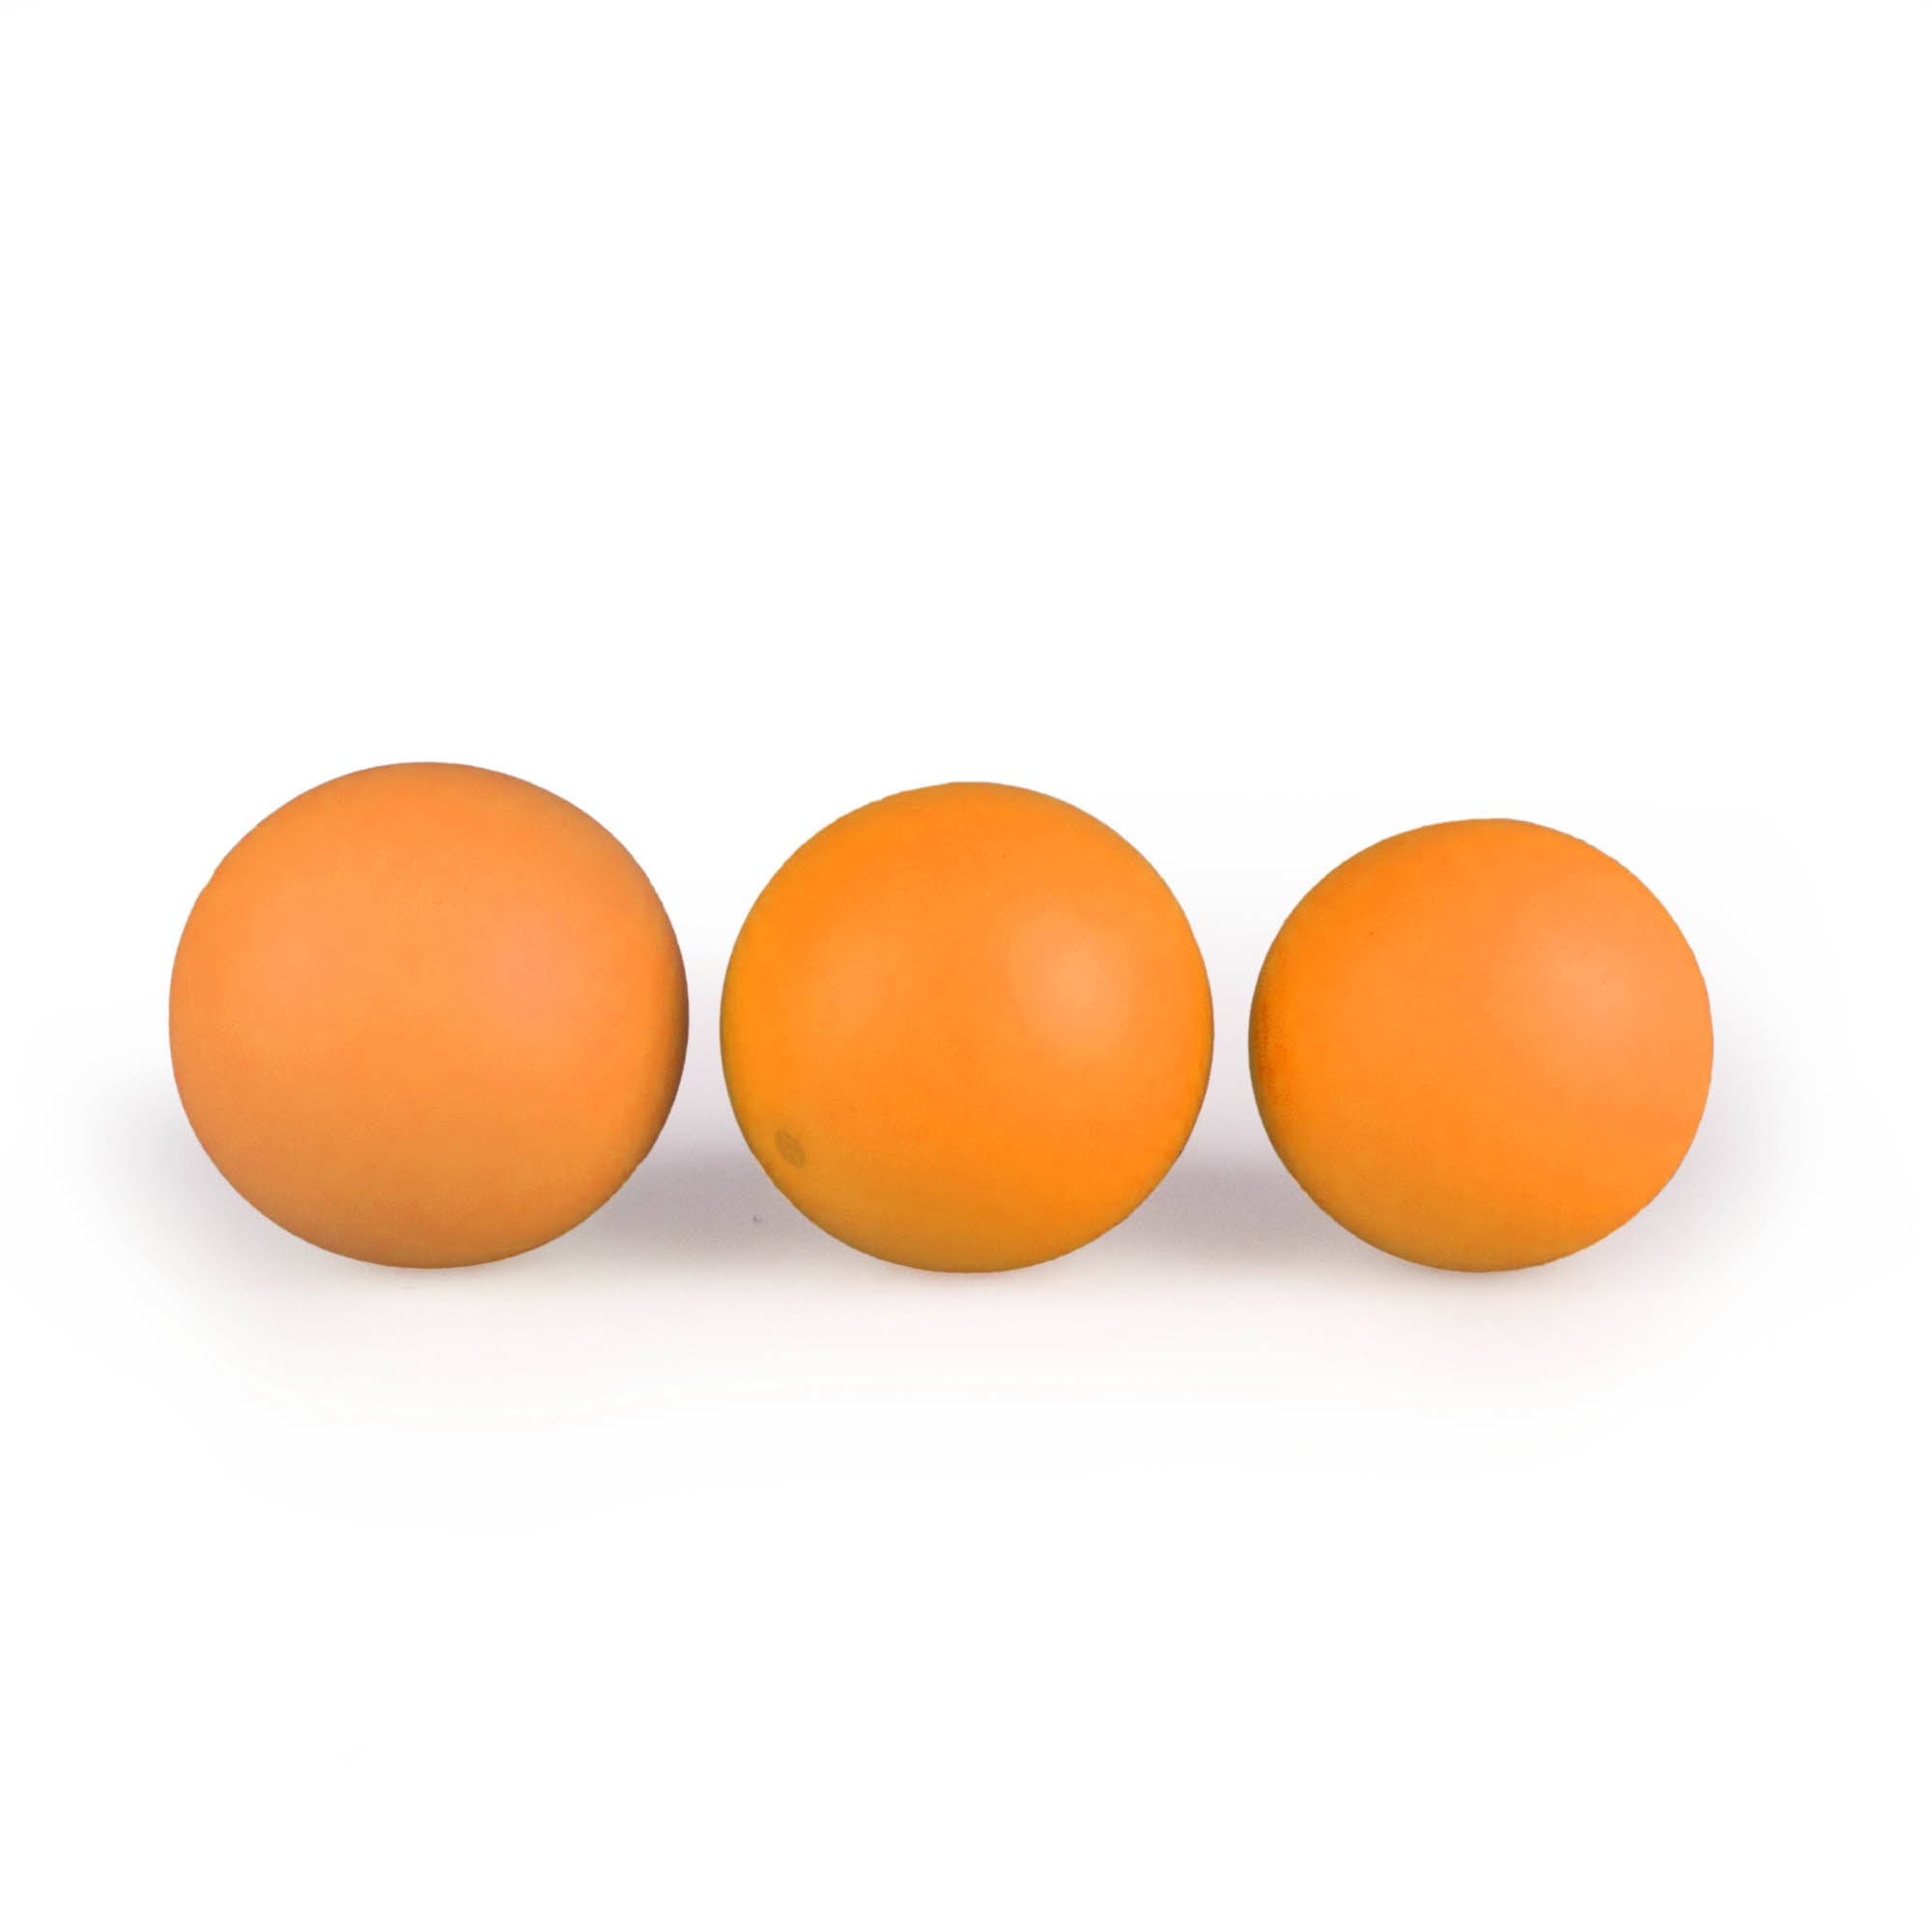 MMX juggling ball comparison shot in orange